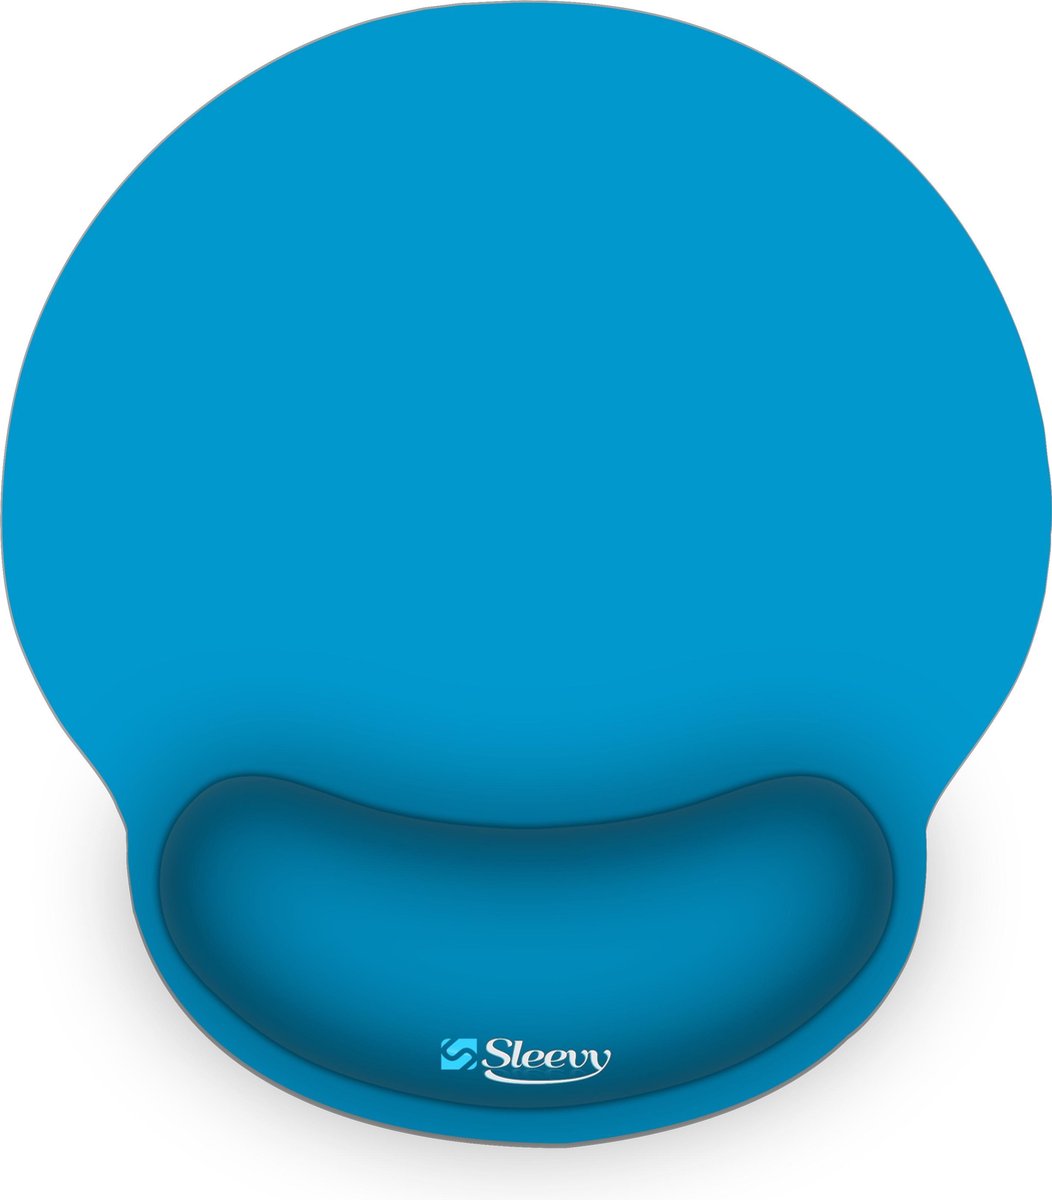 Muismat polssteun blauw - Sleevy - mousepad - Collectie 100+ designs